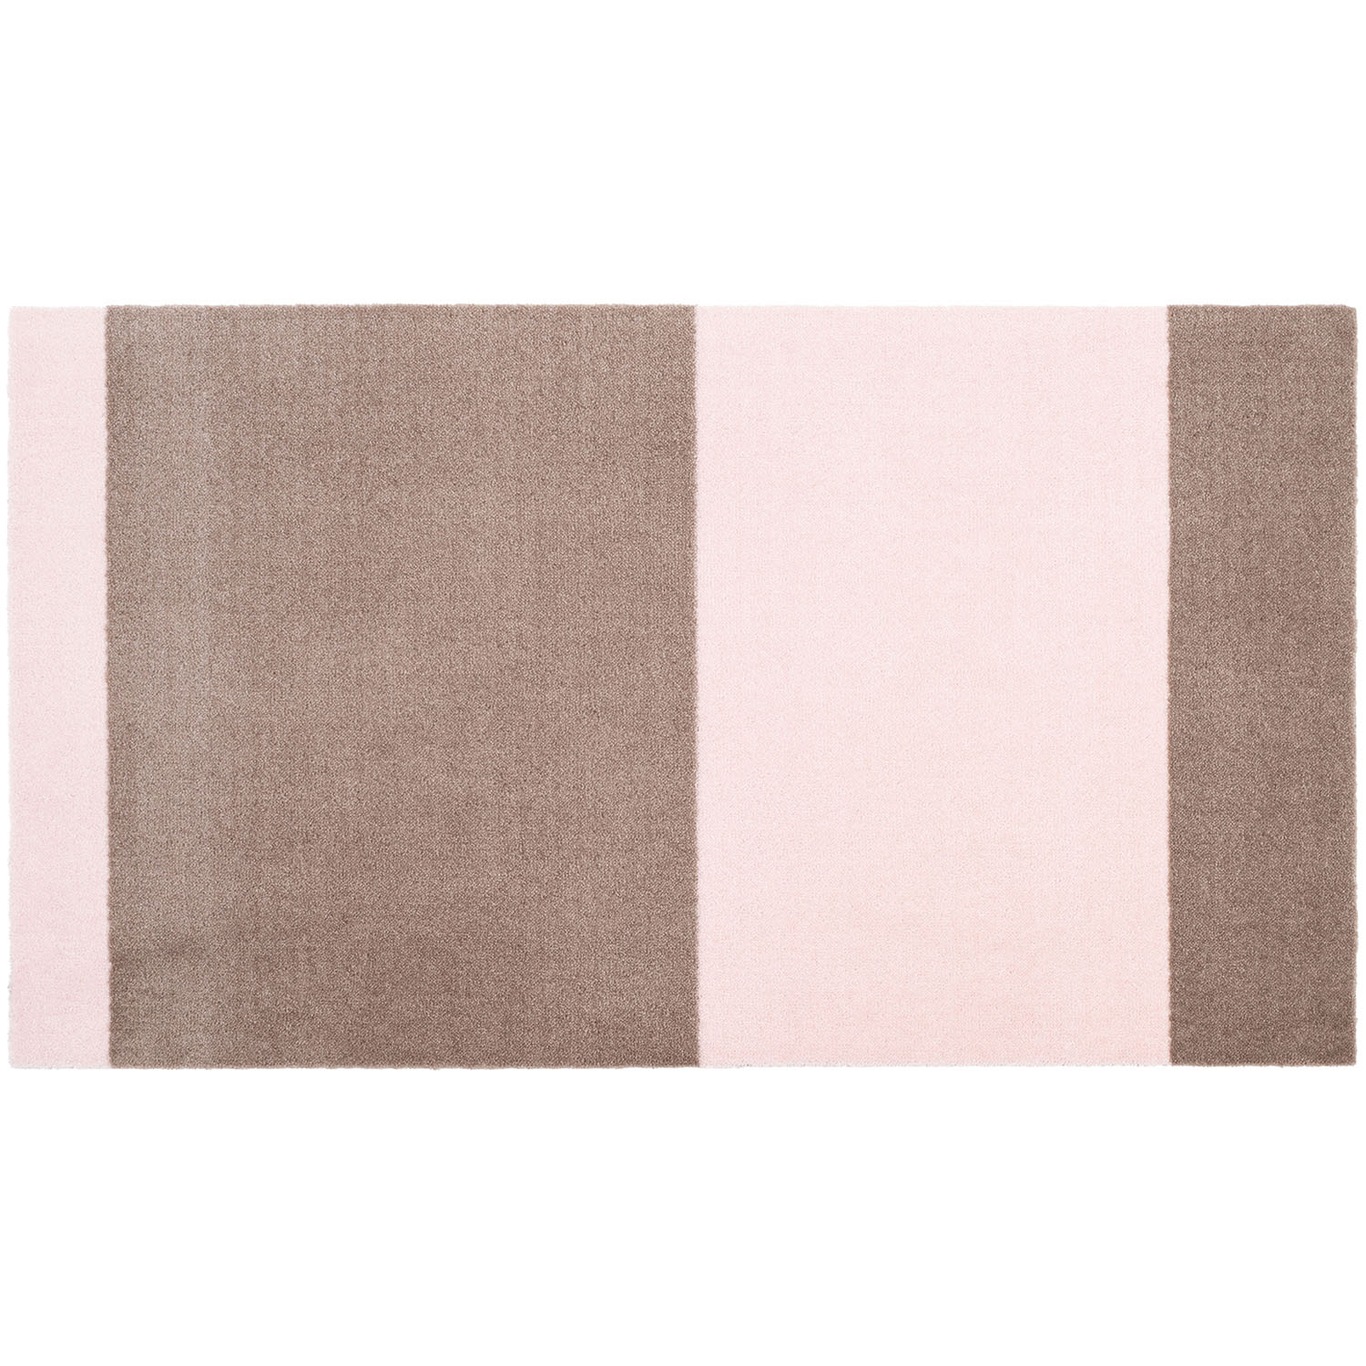 Stripes Rug Sand/Light Rose, 67x120 cm